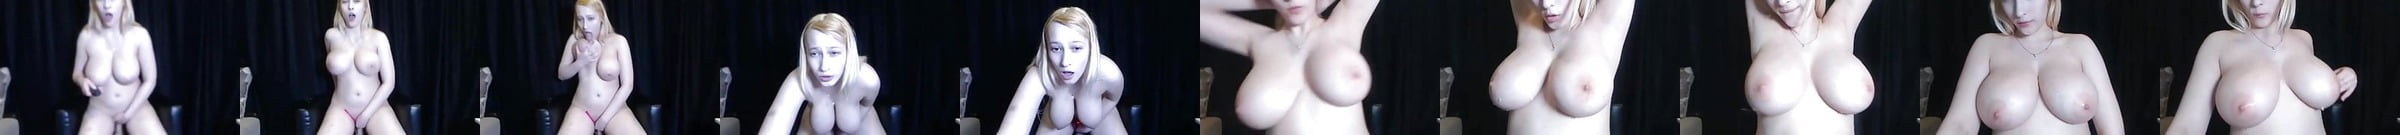 Vidéos Porno Fbb Small Boobs Female Bodybuilders Tiny Tits Breasts S